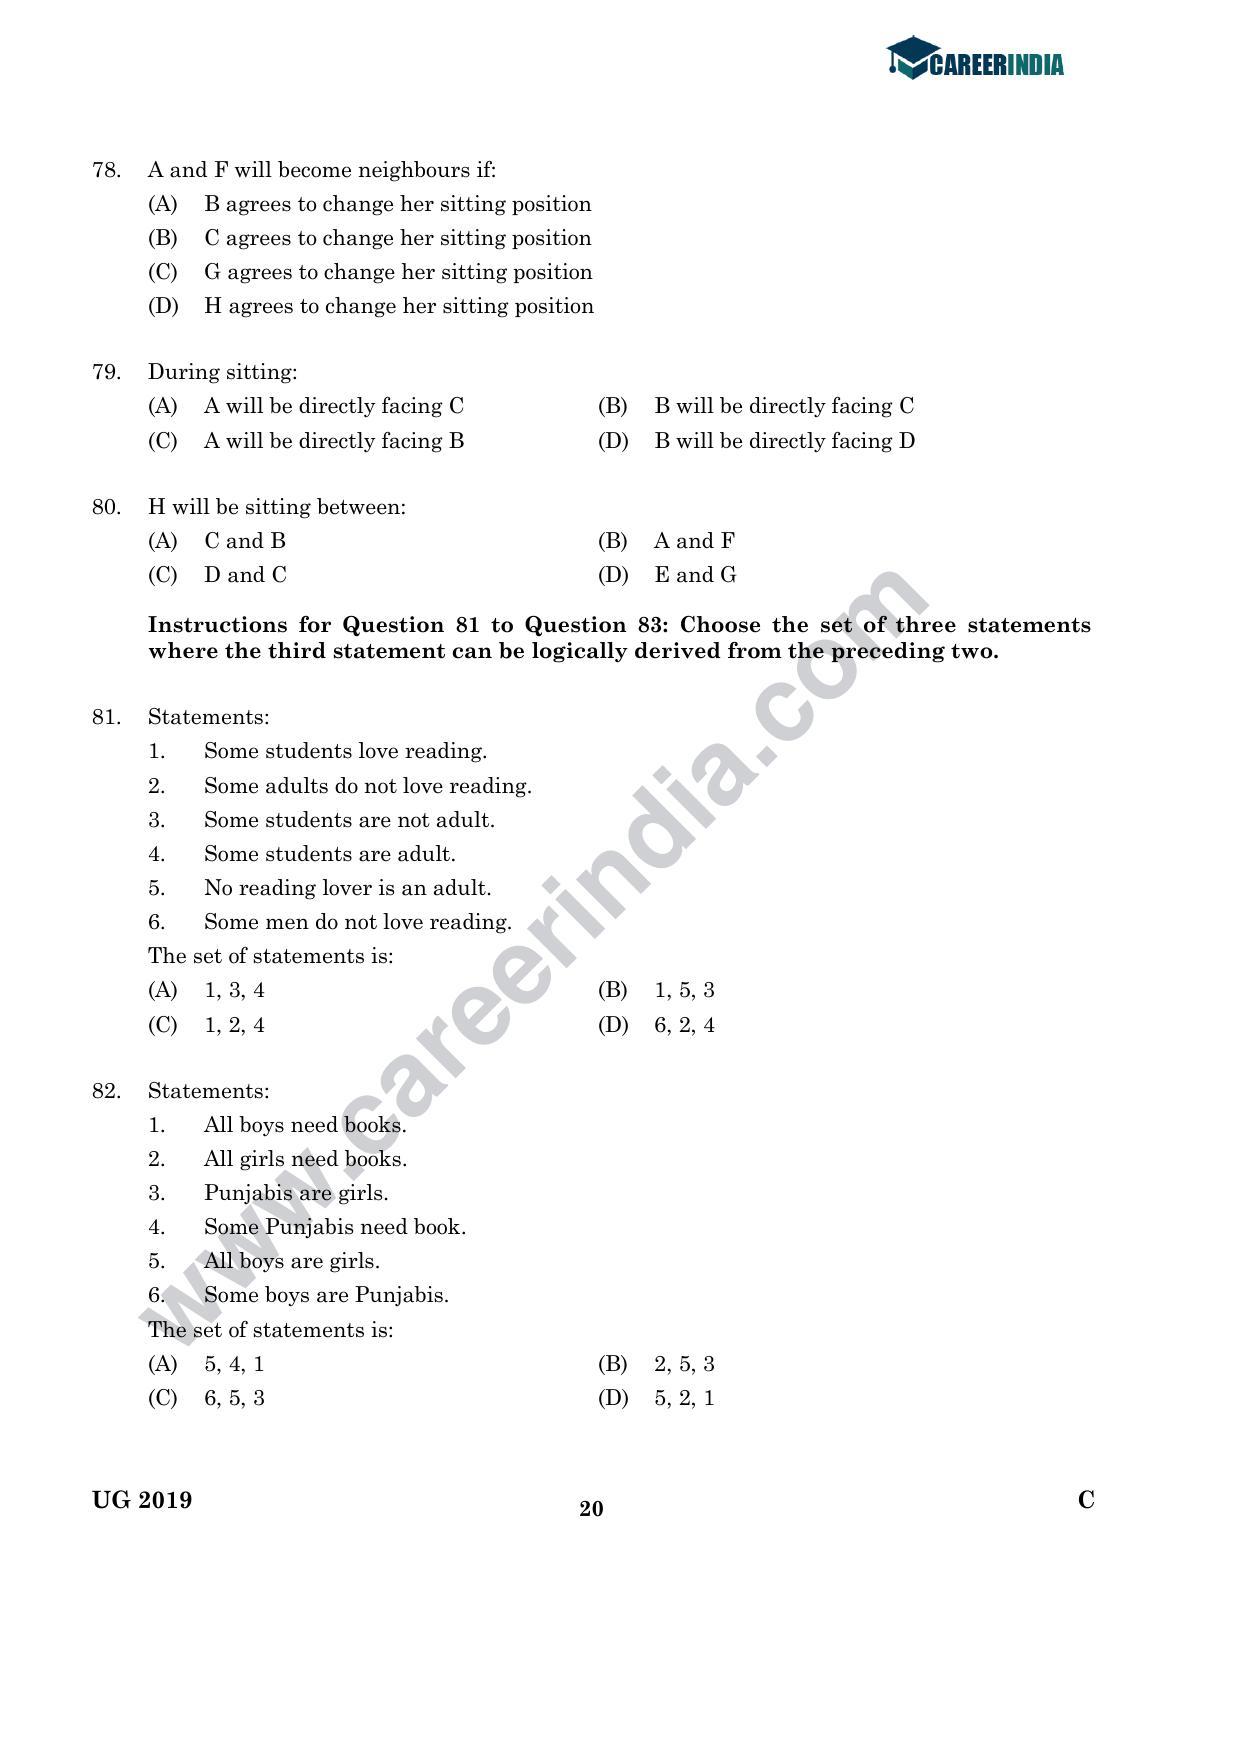 CLAT 2019 UG Legal-Aptitude Question Paper - Page 19